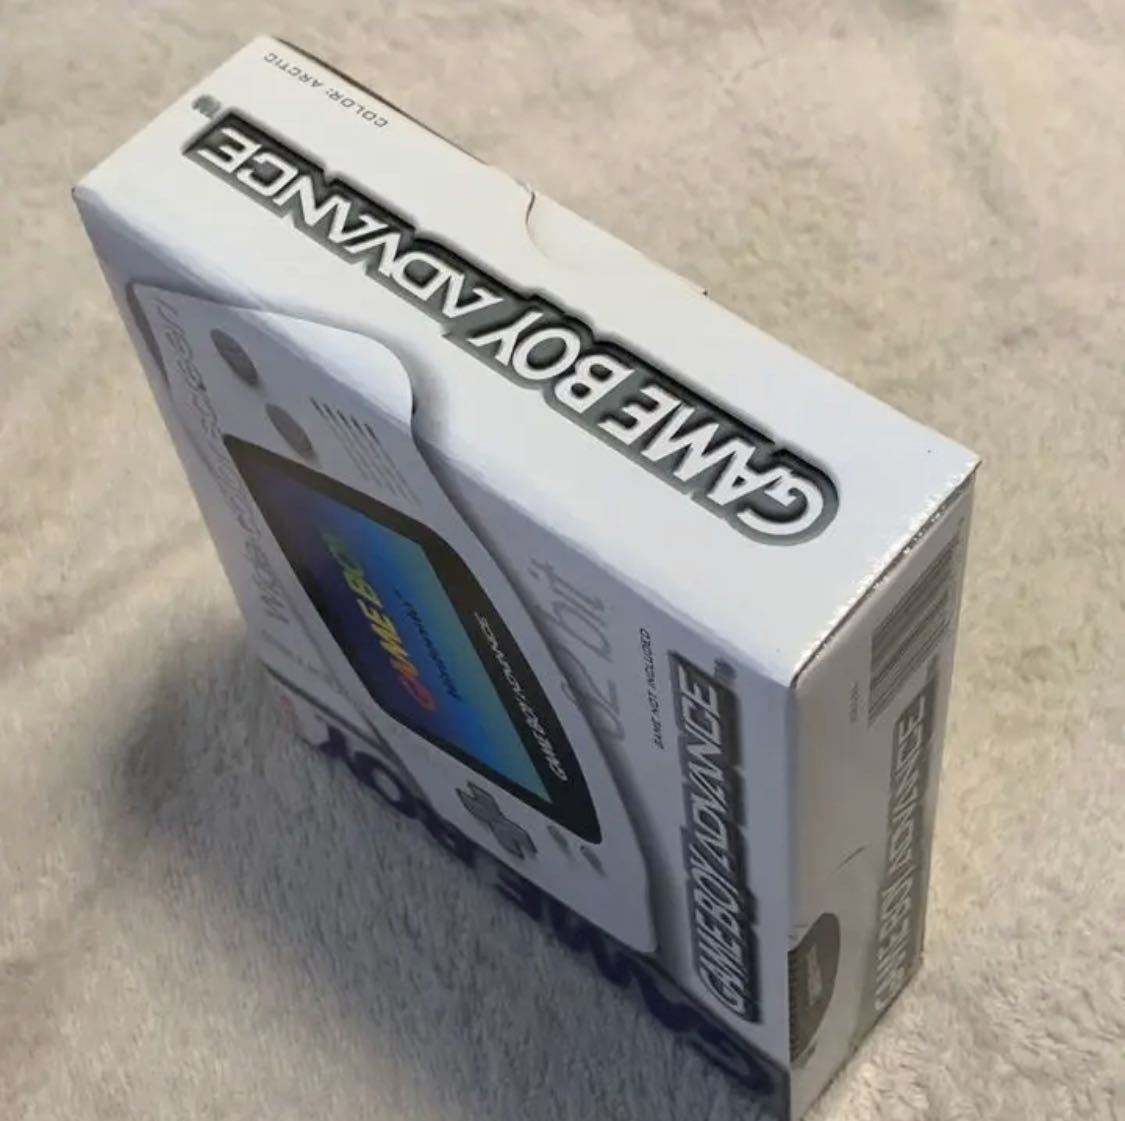  Game Boy Advance new goods abroad English version body Nintendo Vintage 